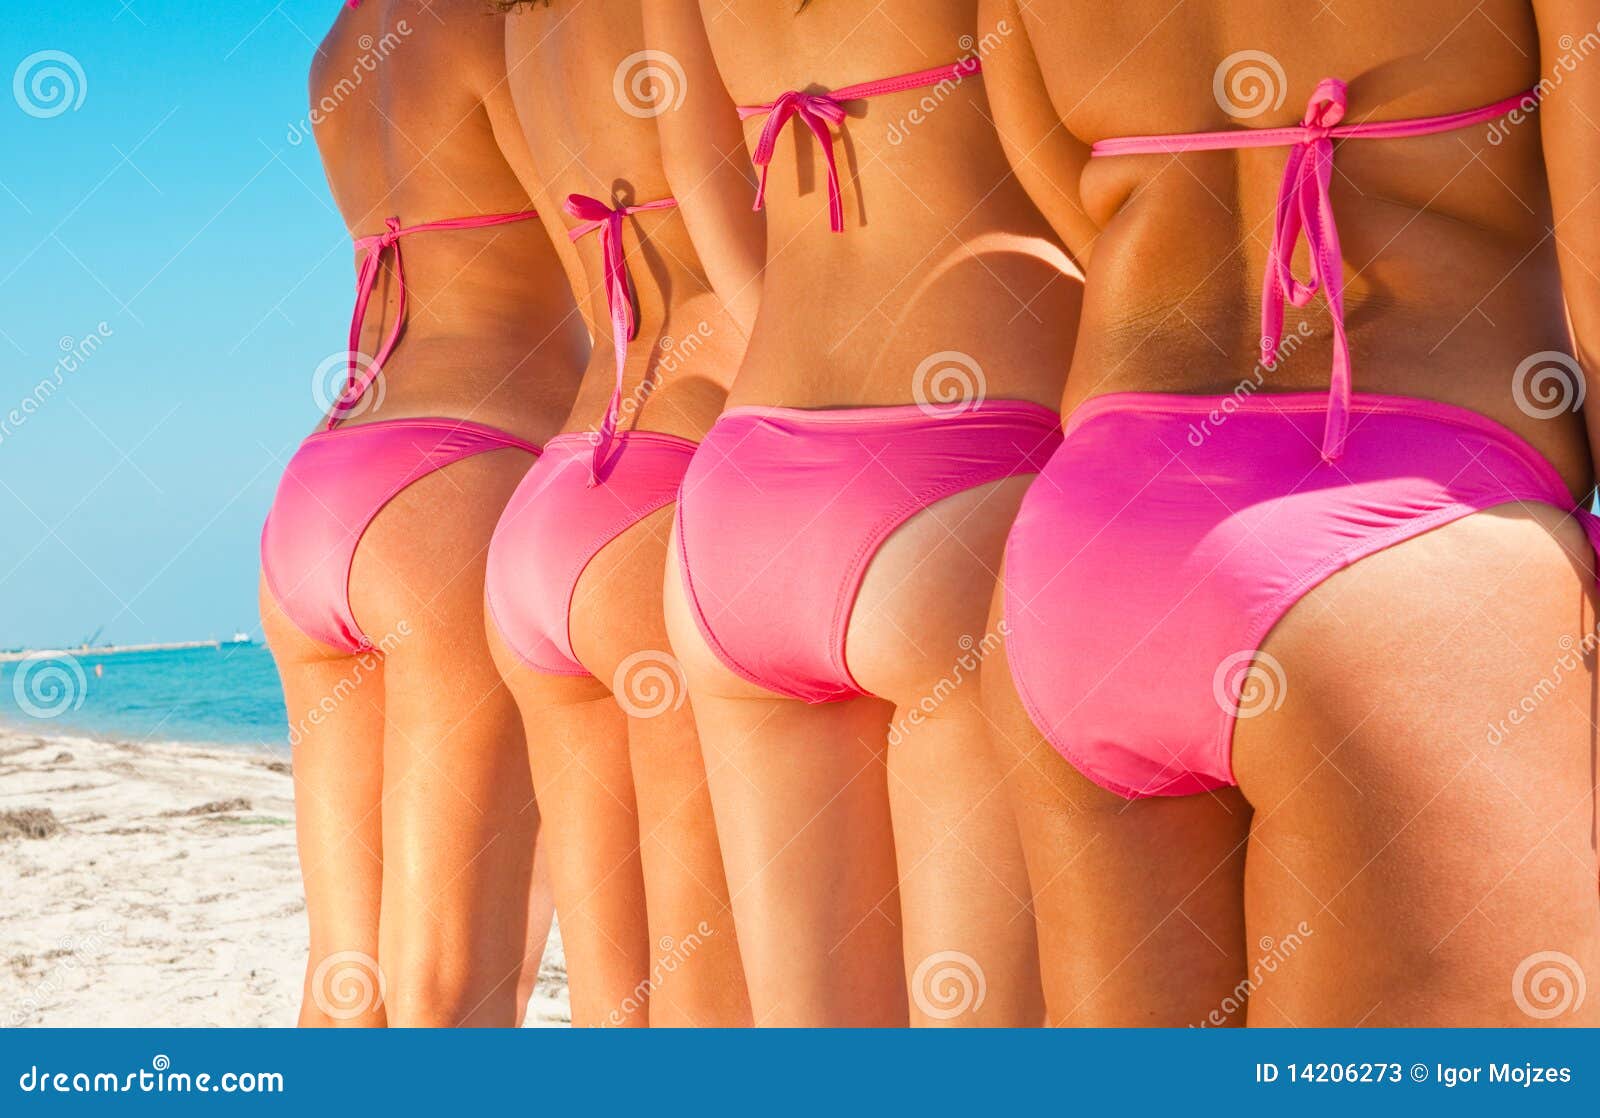 Young Girls Bottom in Pink Bikini Stock Image - Image of panties, pretty:  14206273